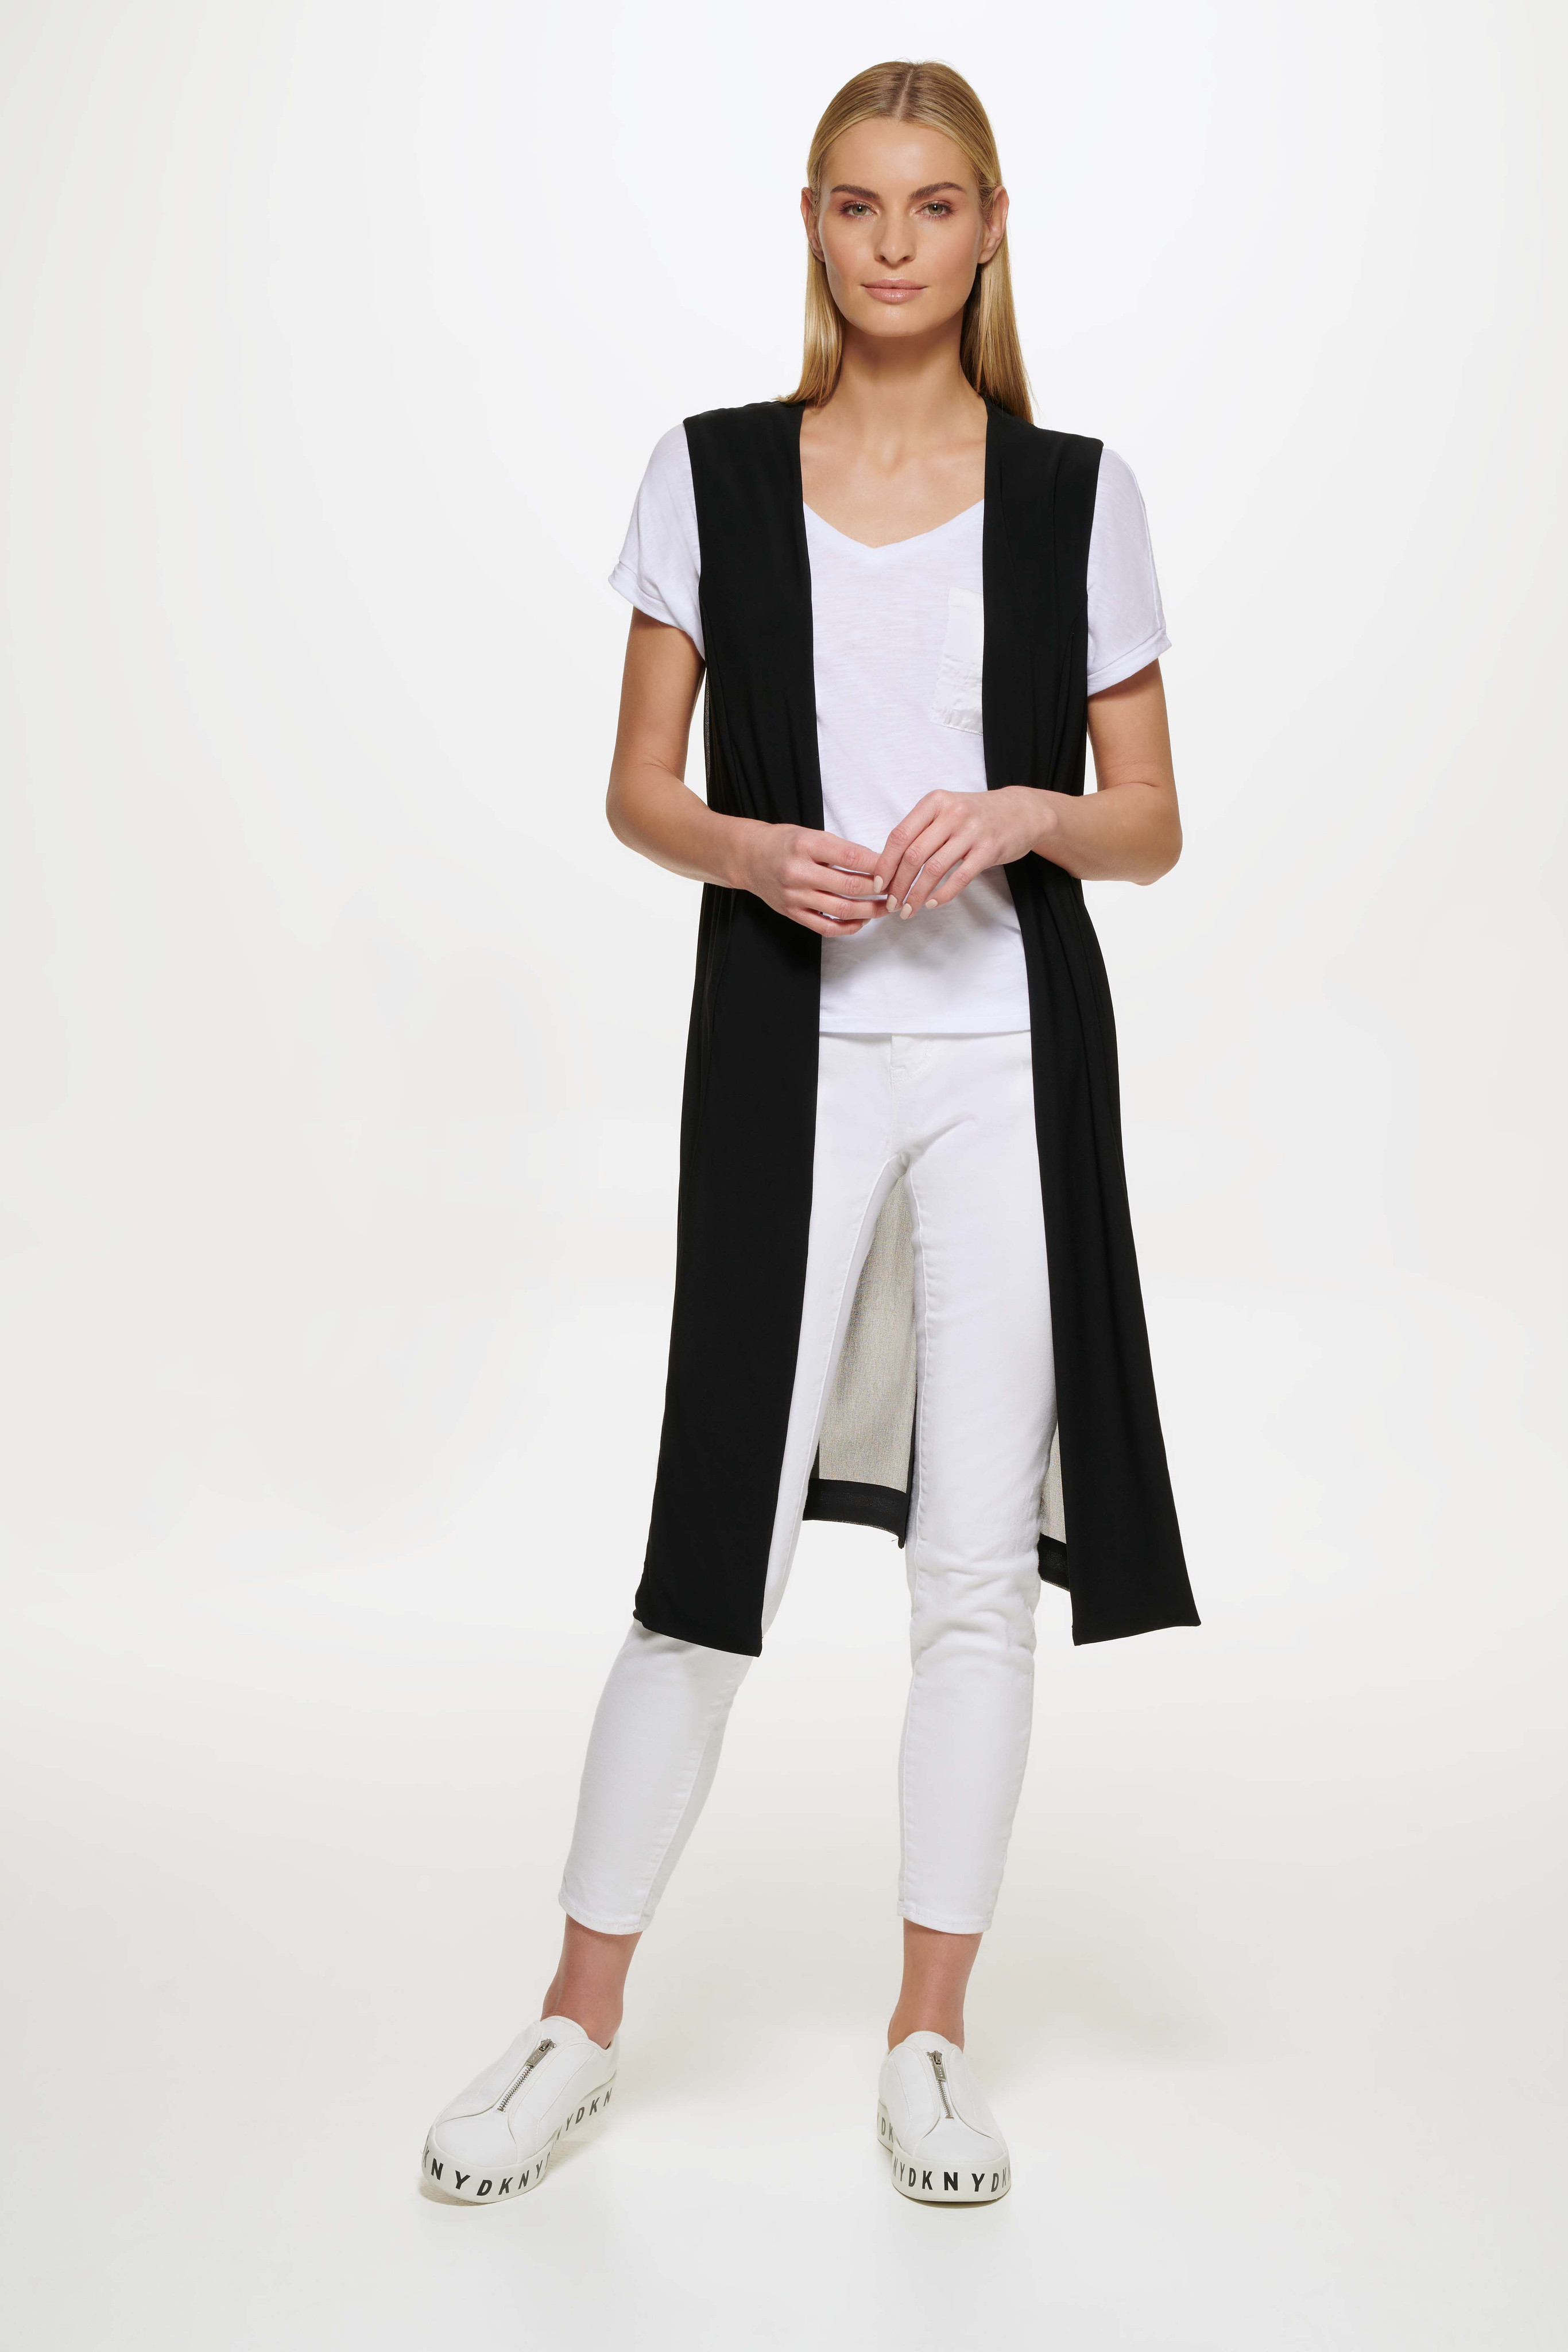 DKNY - Long cardigan with chiffon back, Black, large image number 3